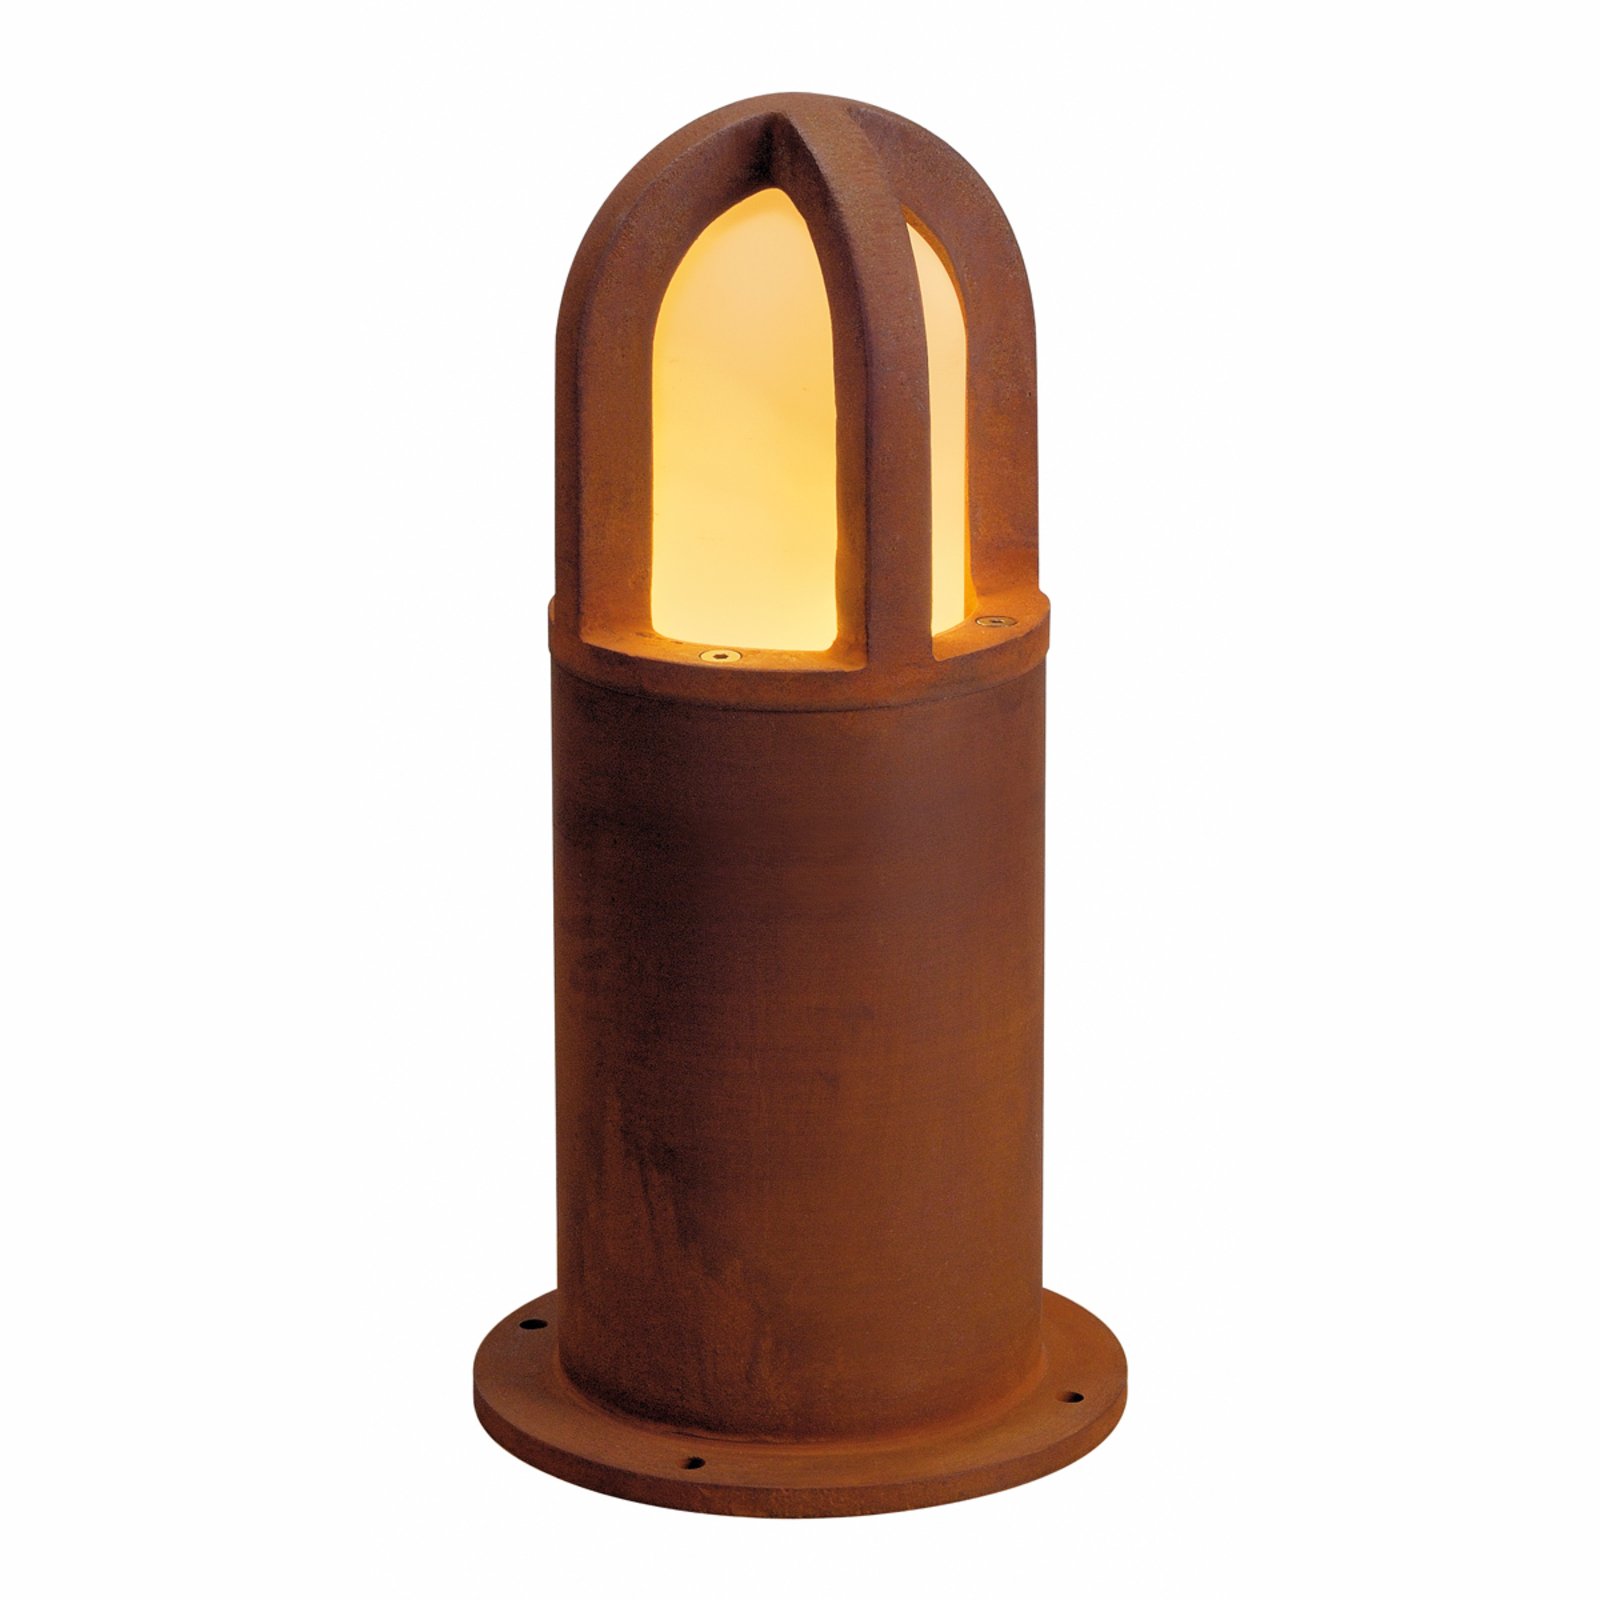 SLV Rusty Cone 40 rust brown pillar light 40 cm